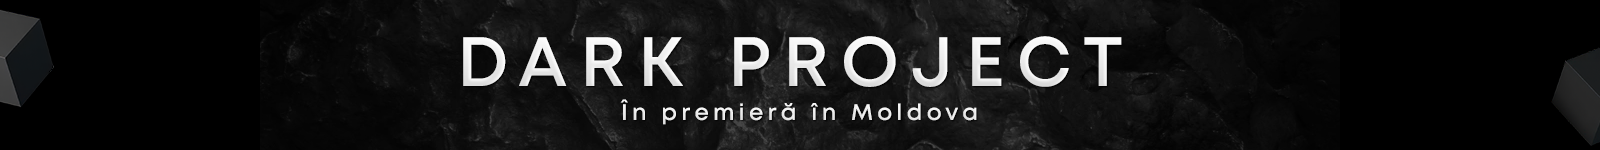 Producator Dark Project banner